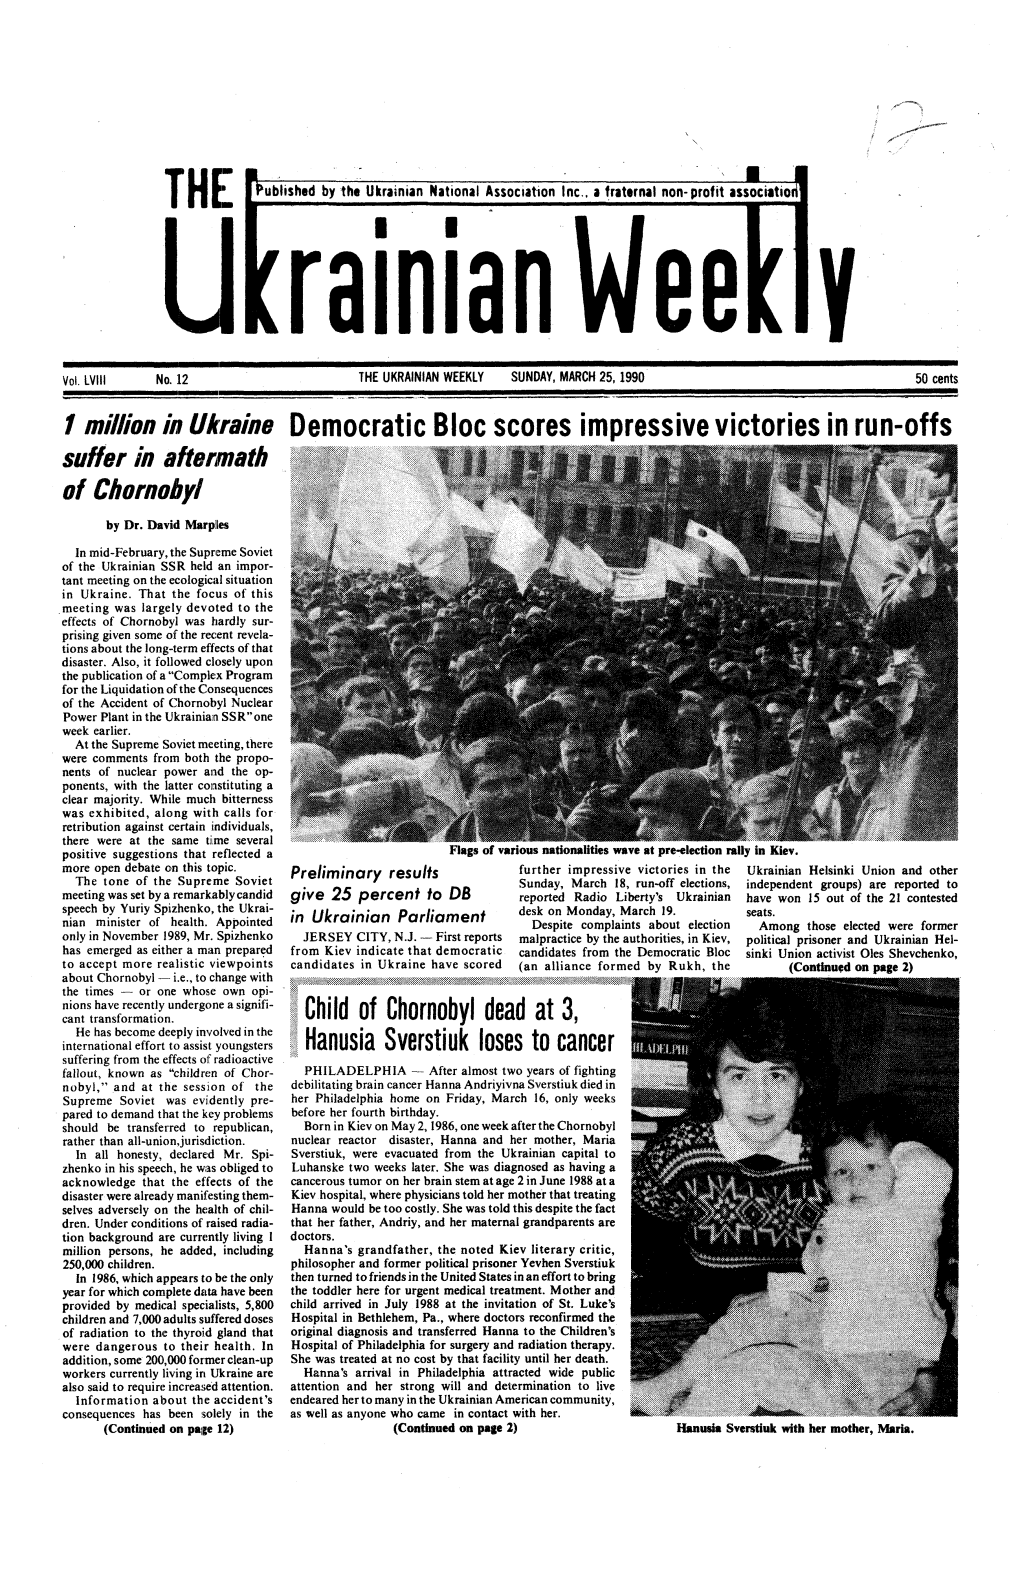 The Ukrainian Weekly 1990, No.12